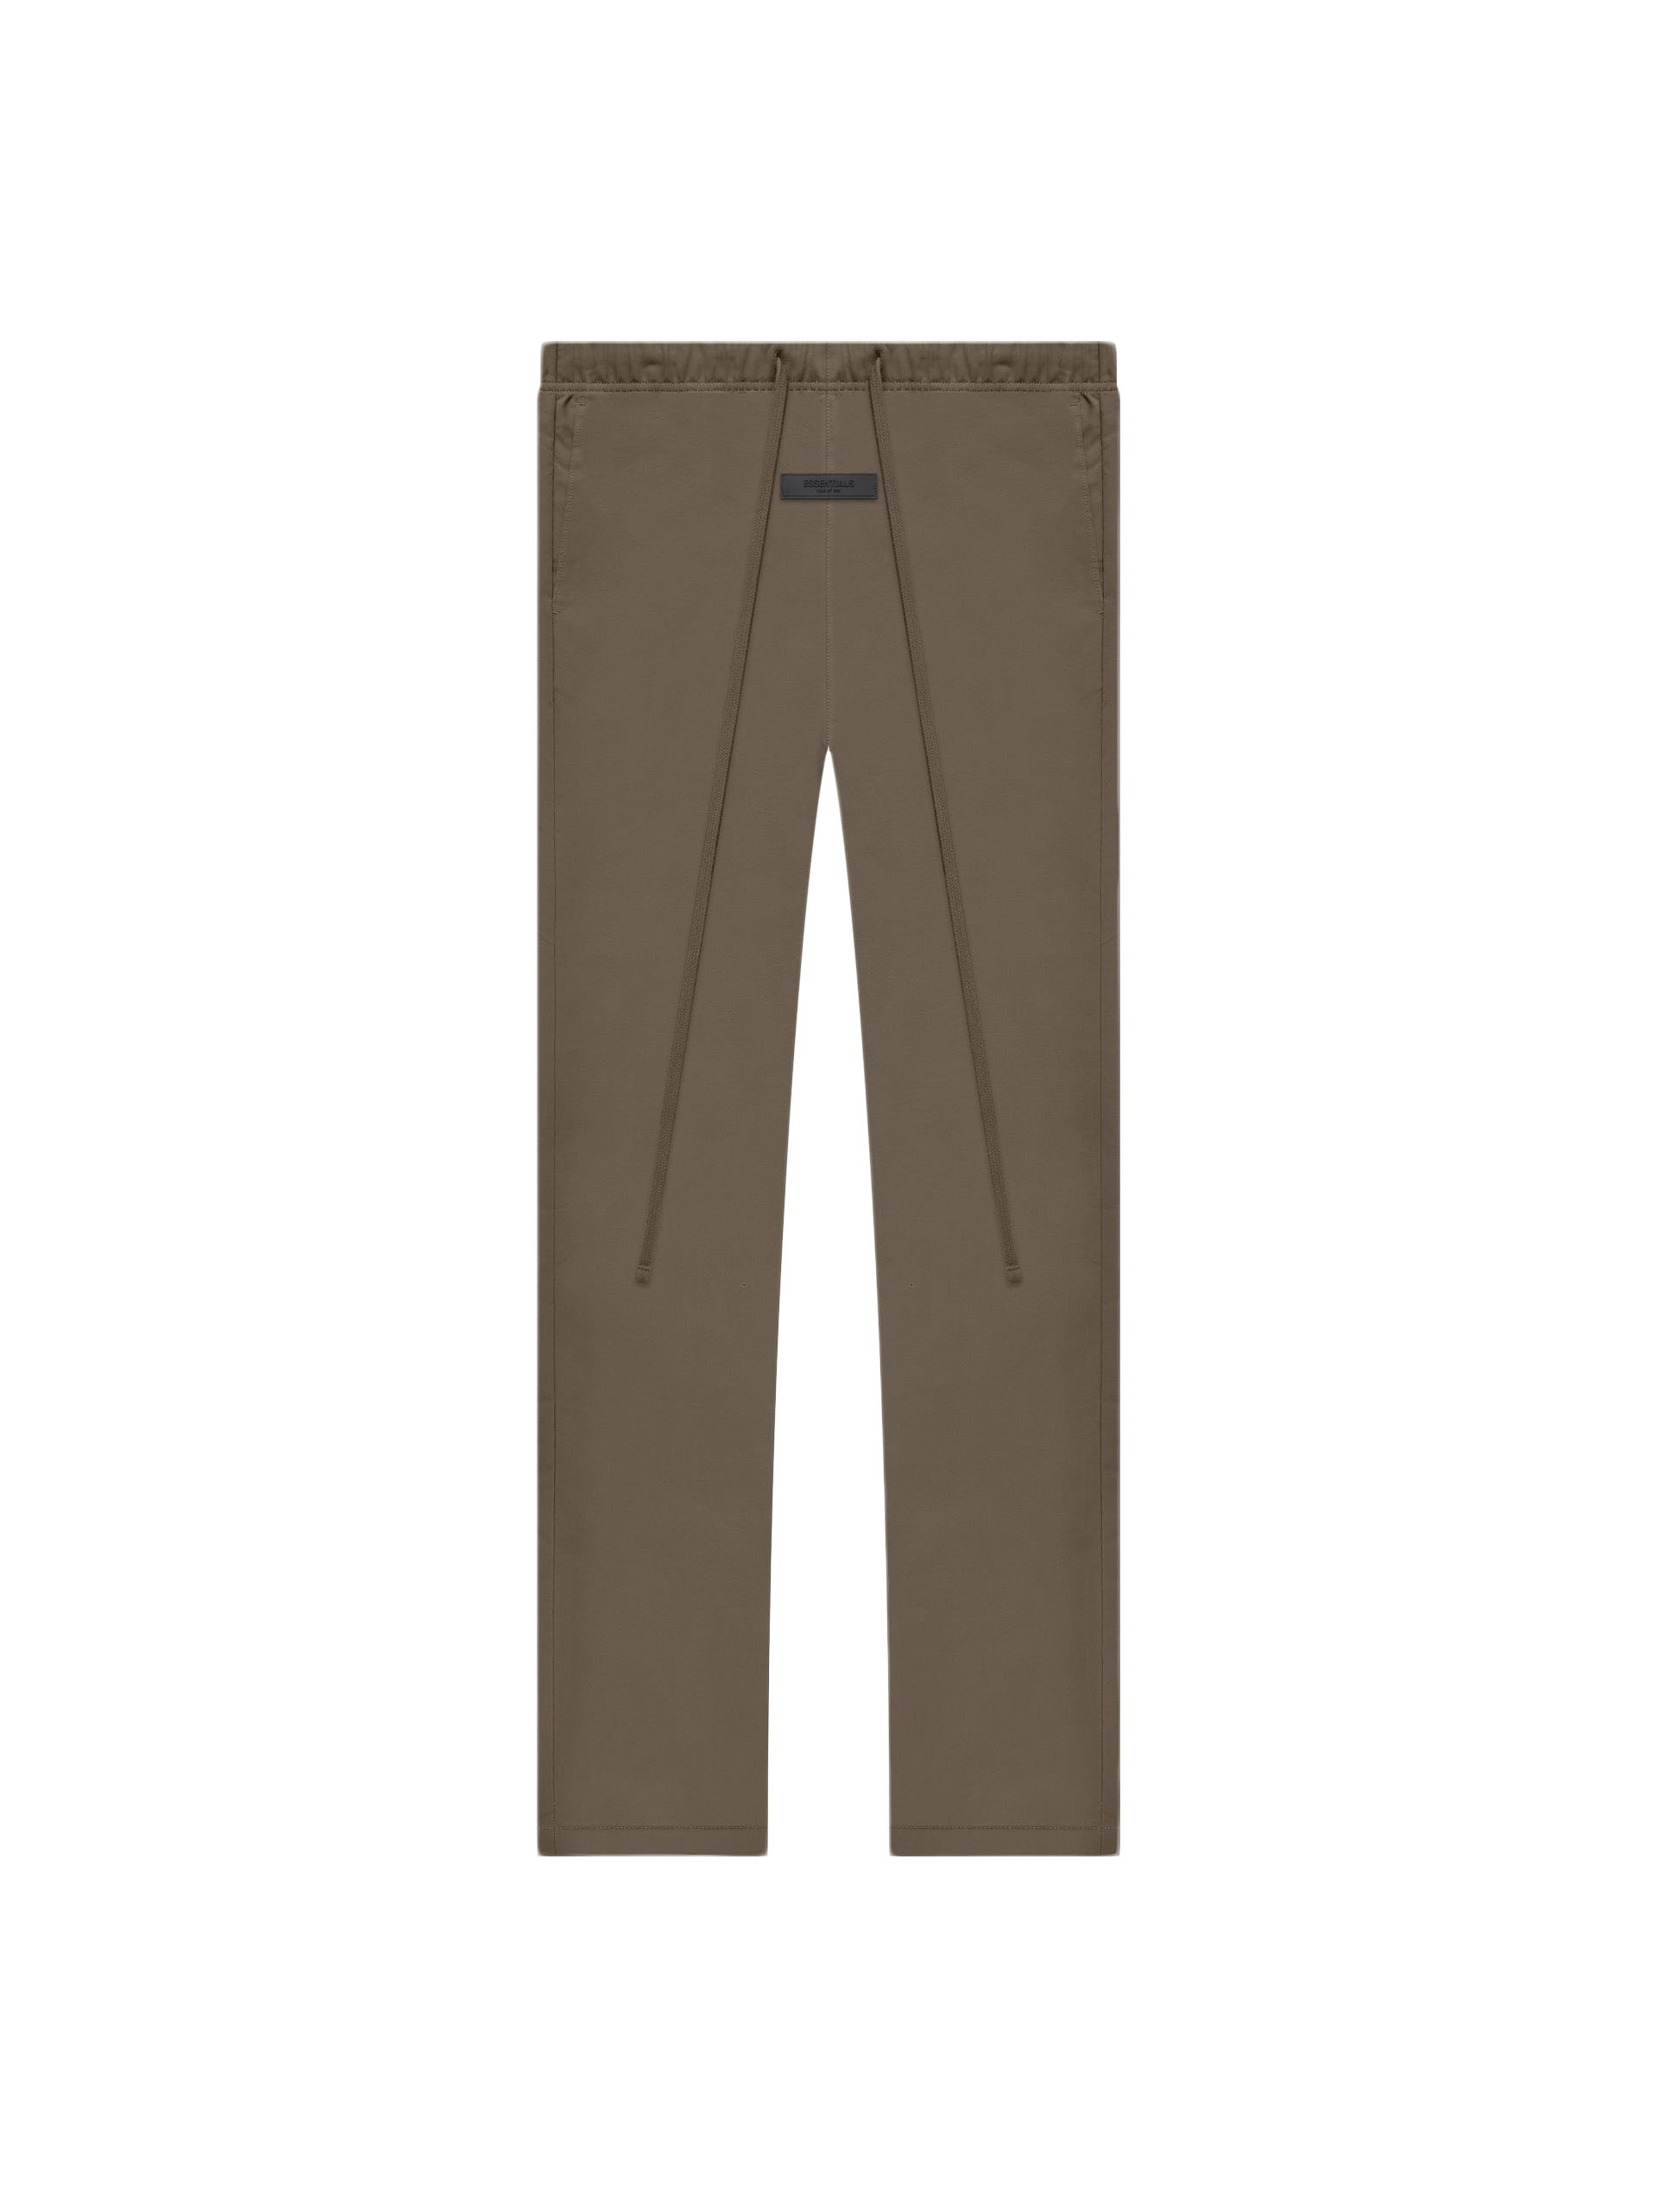 Botany Flat Front Flat-Front Dress Pants Pants for Men | Mercari